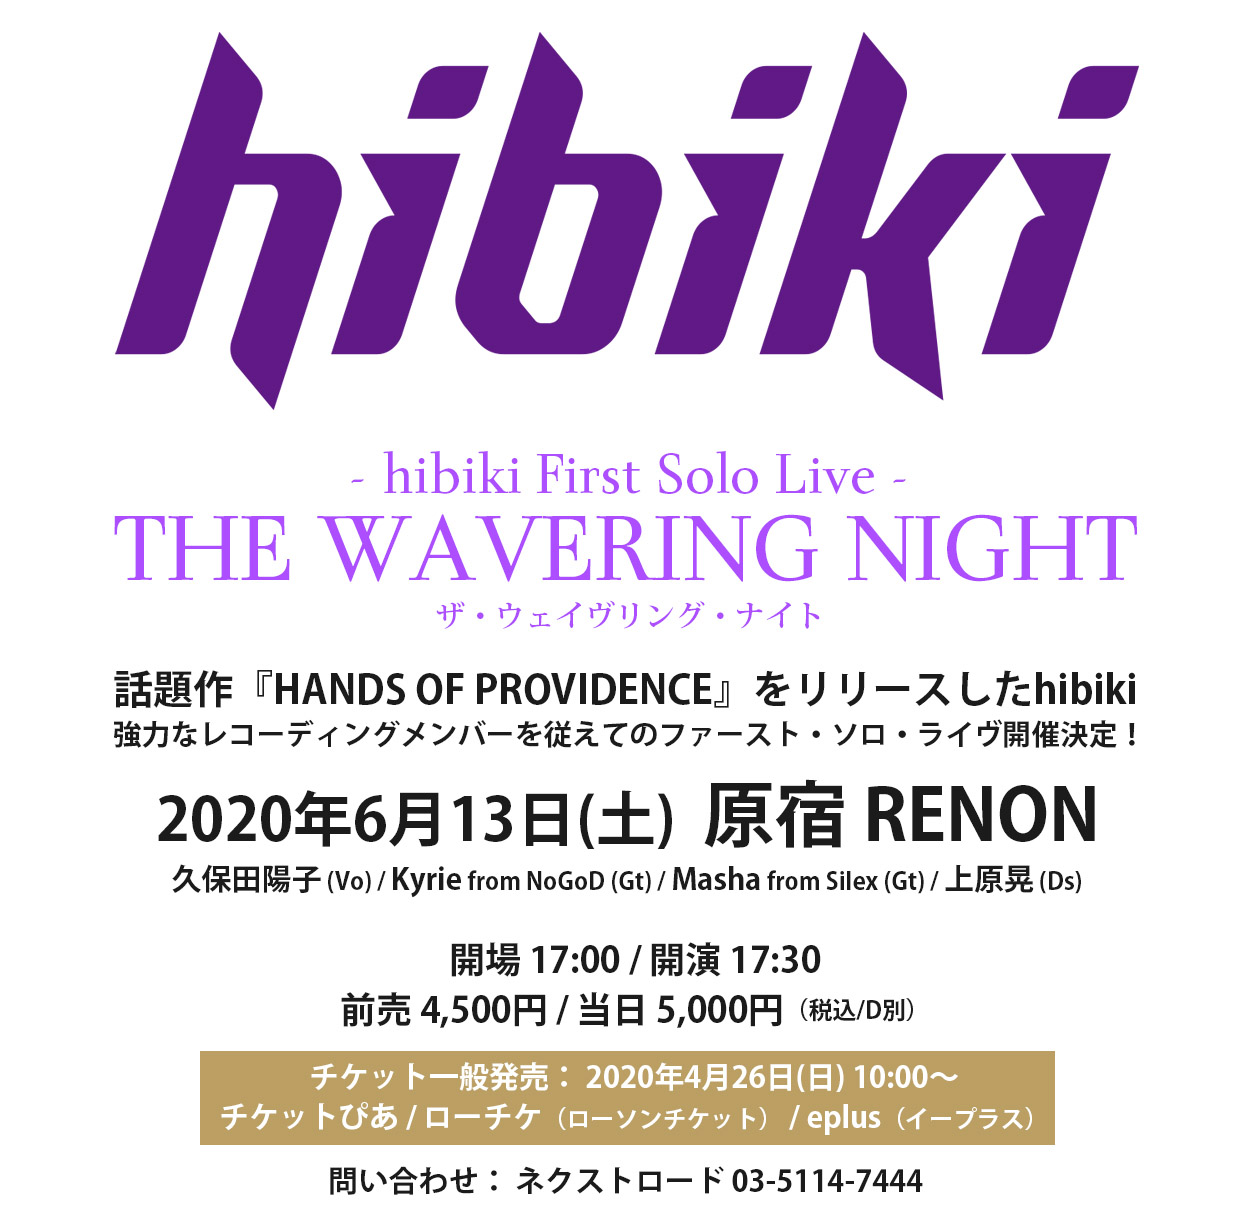 hibiki First Solo Live - THE WAVERING NIGHT